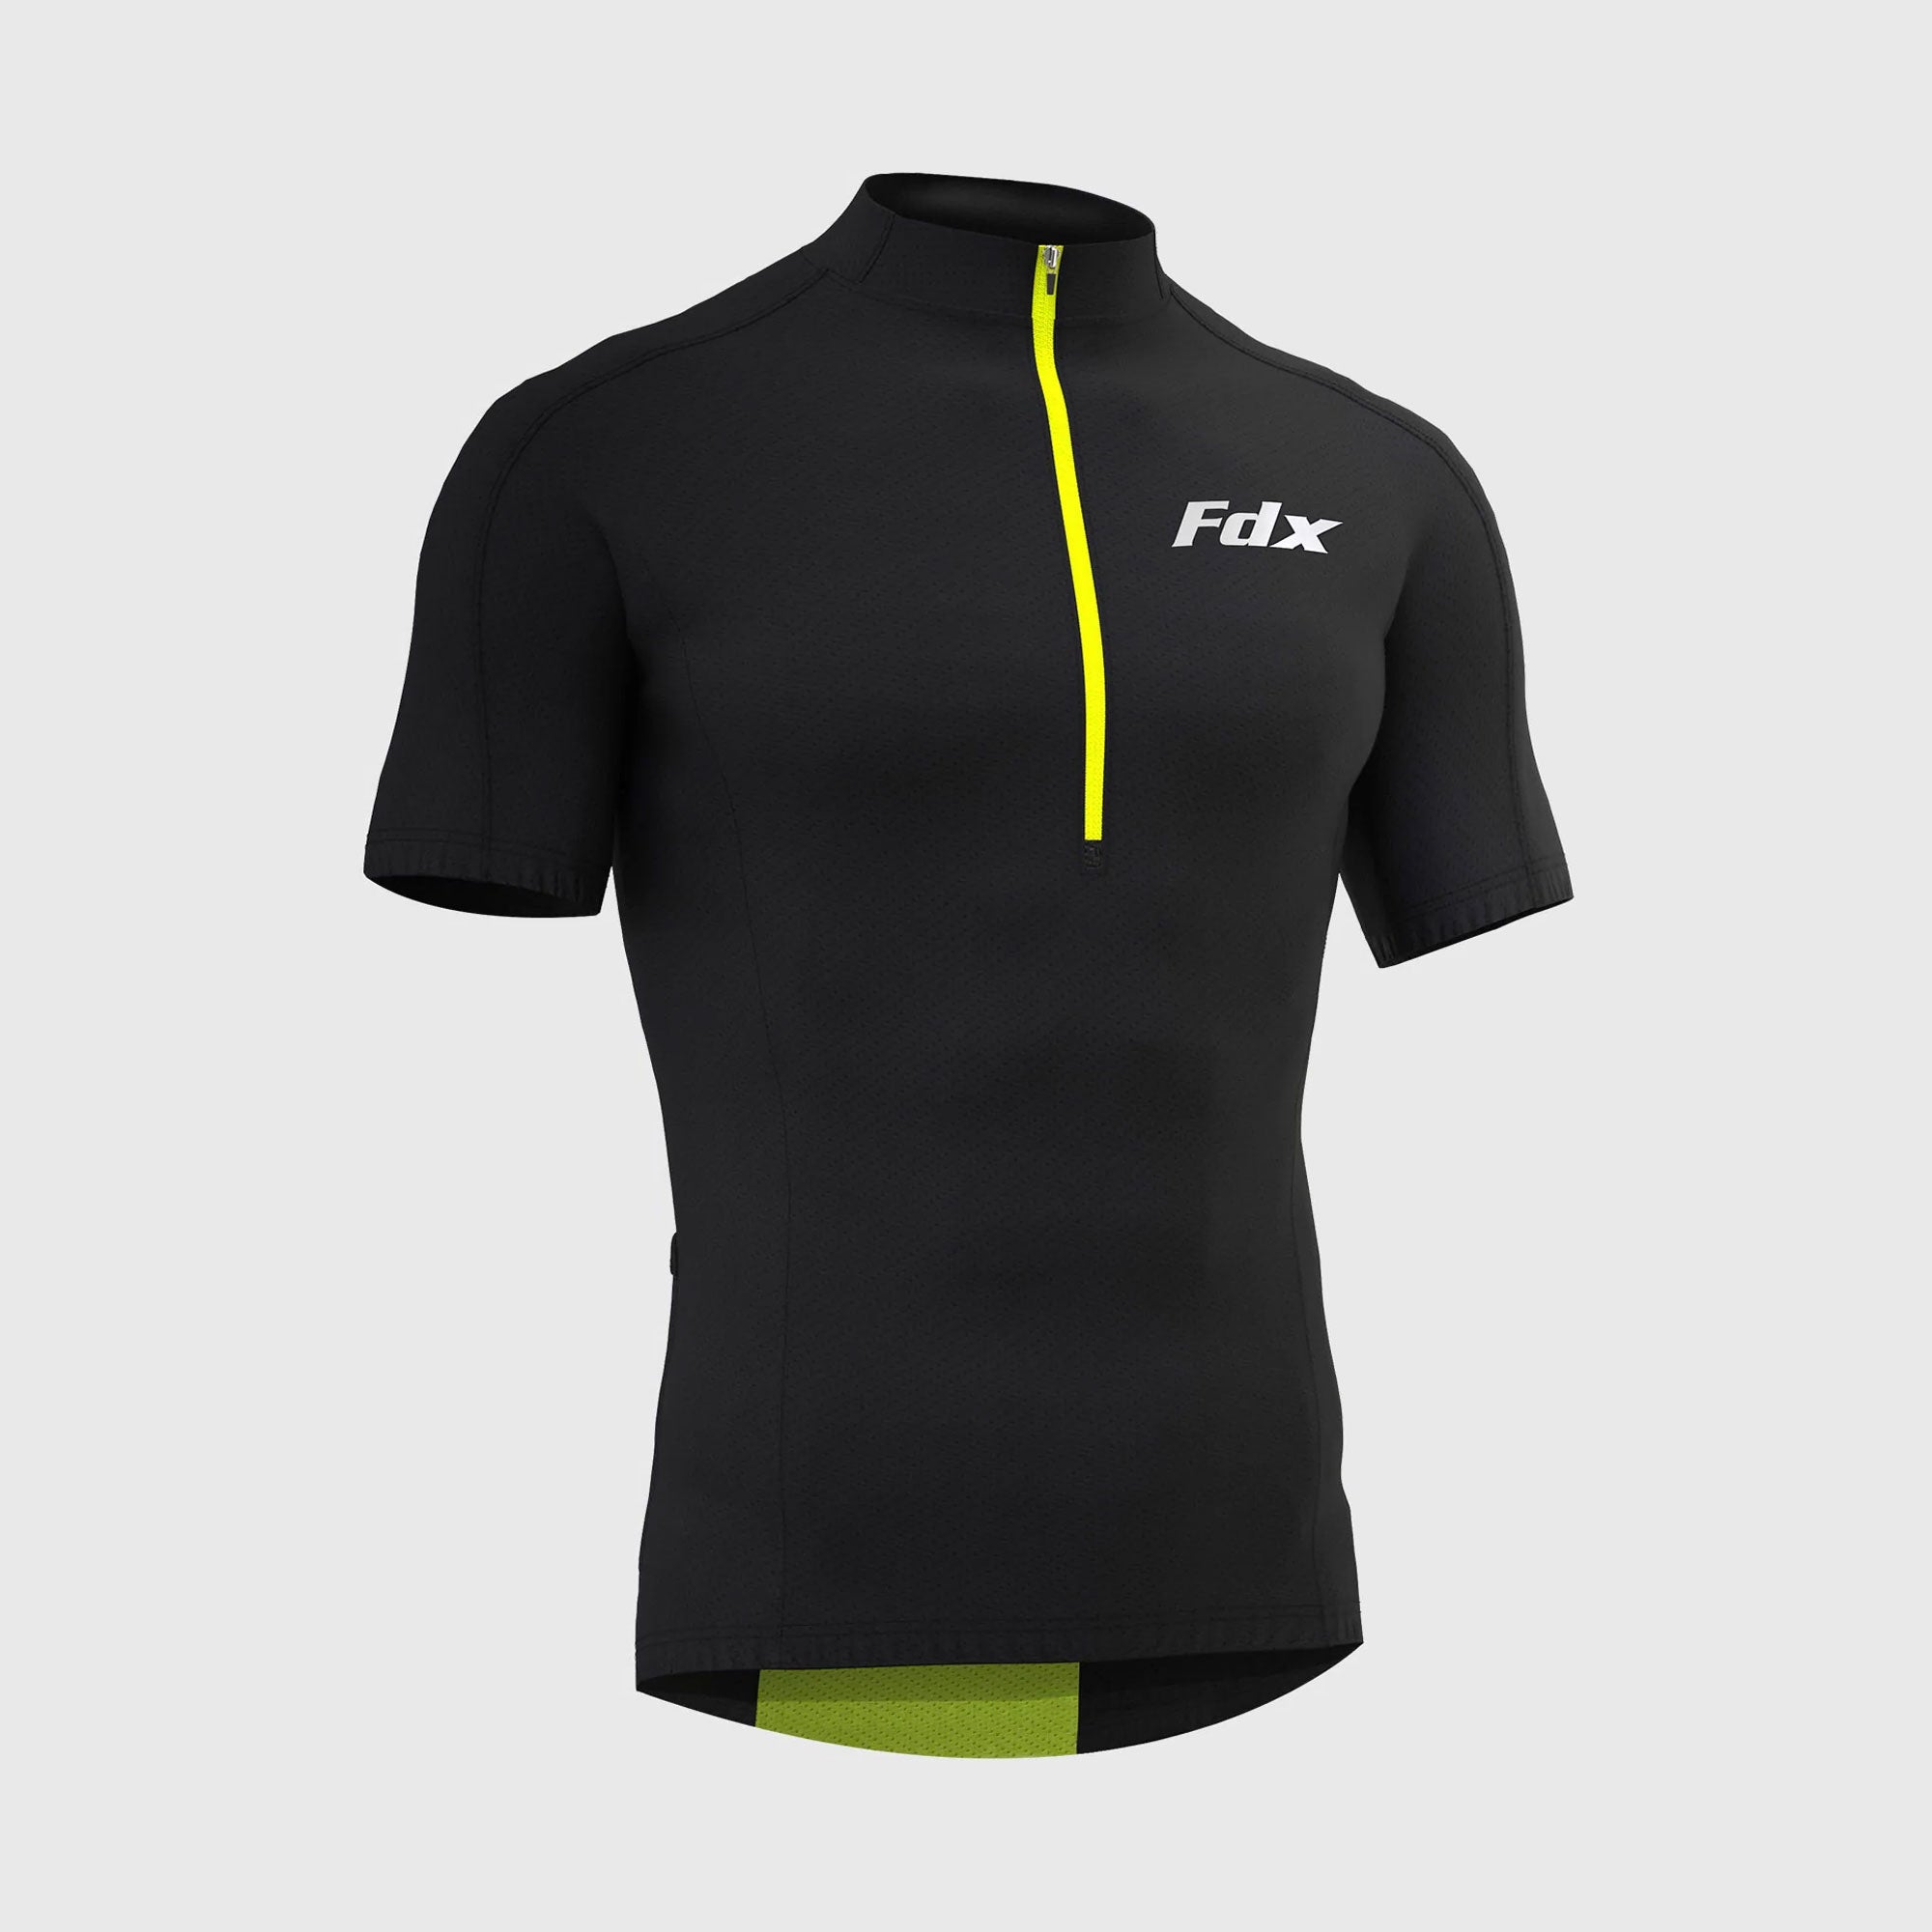 Fdx Pace Black Men's Short Sleeve Summer Cycling Jersey